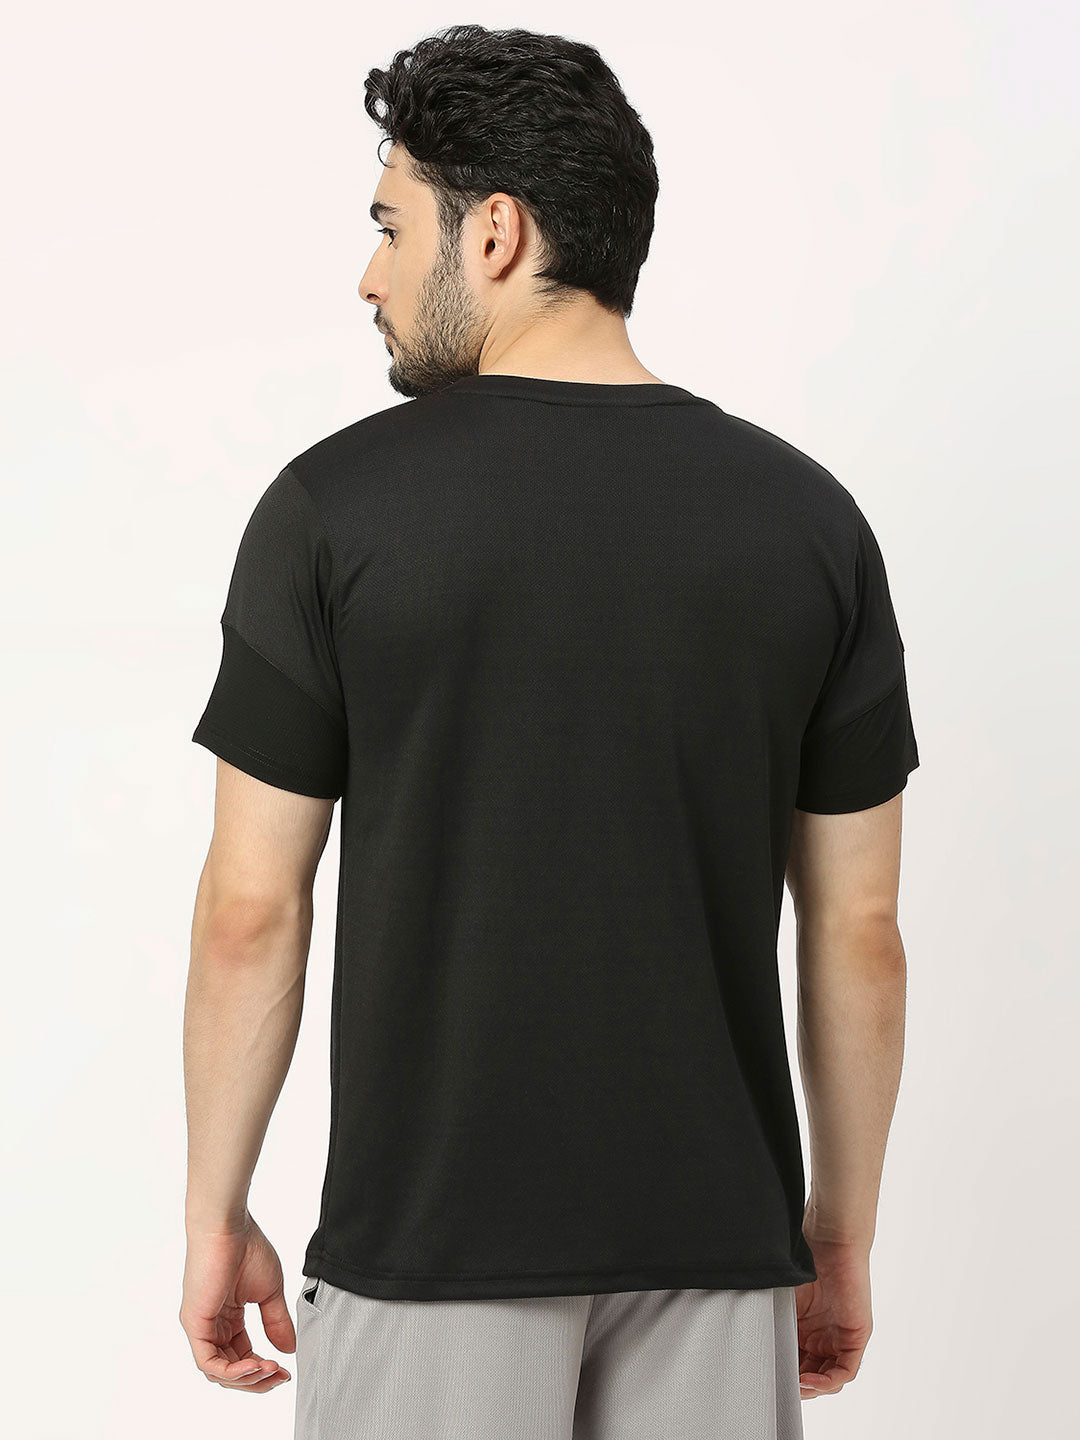 Men's Sports T-Shirt - Black - 1